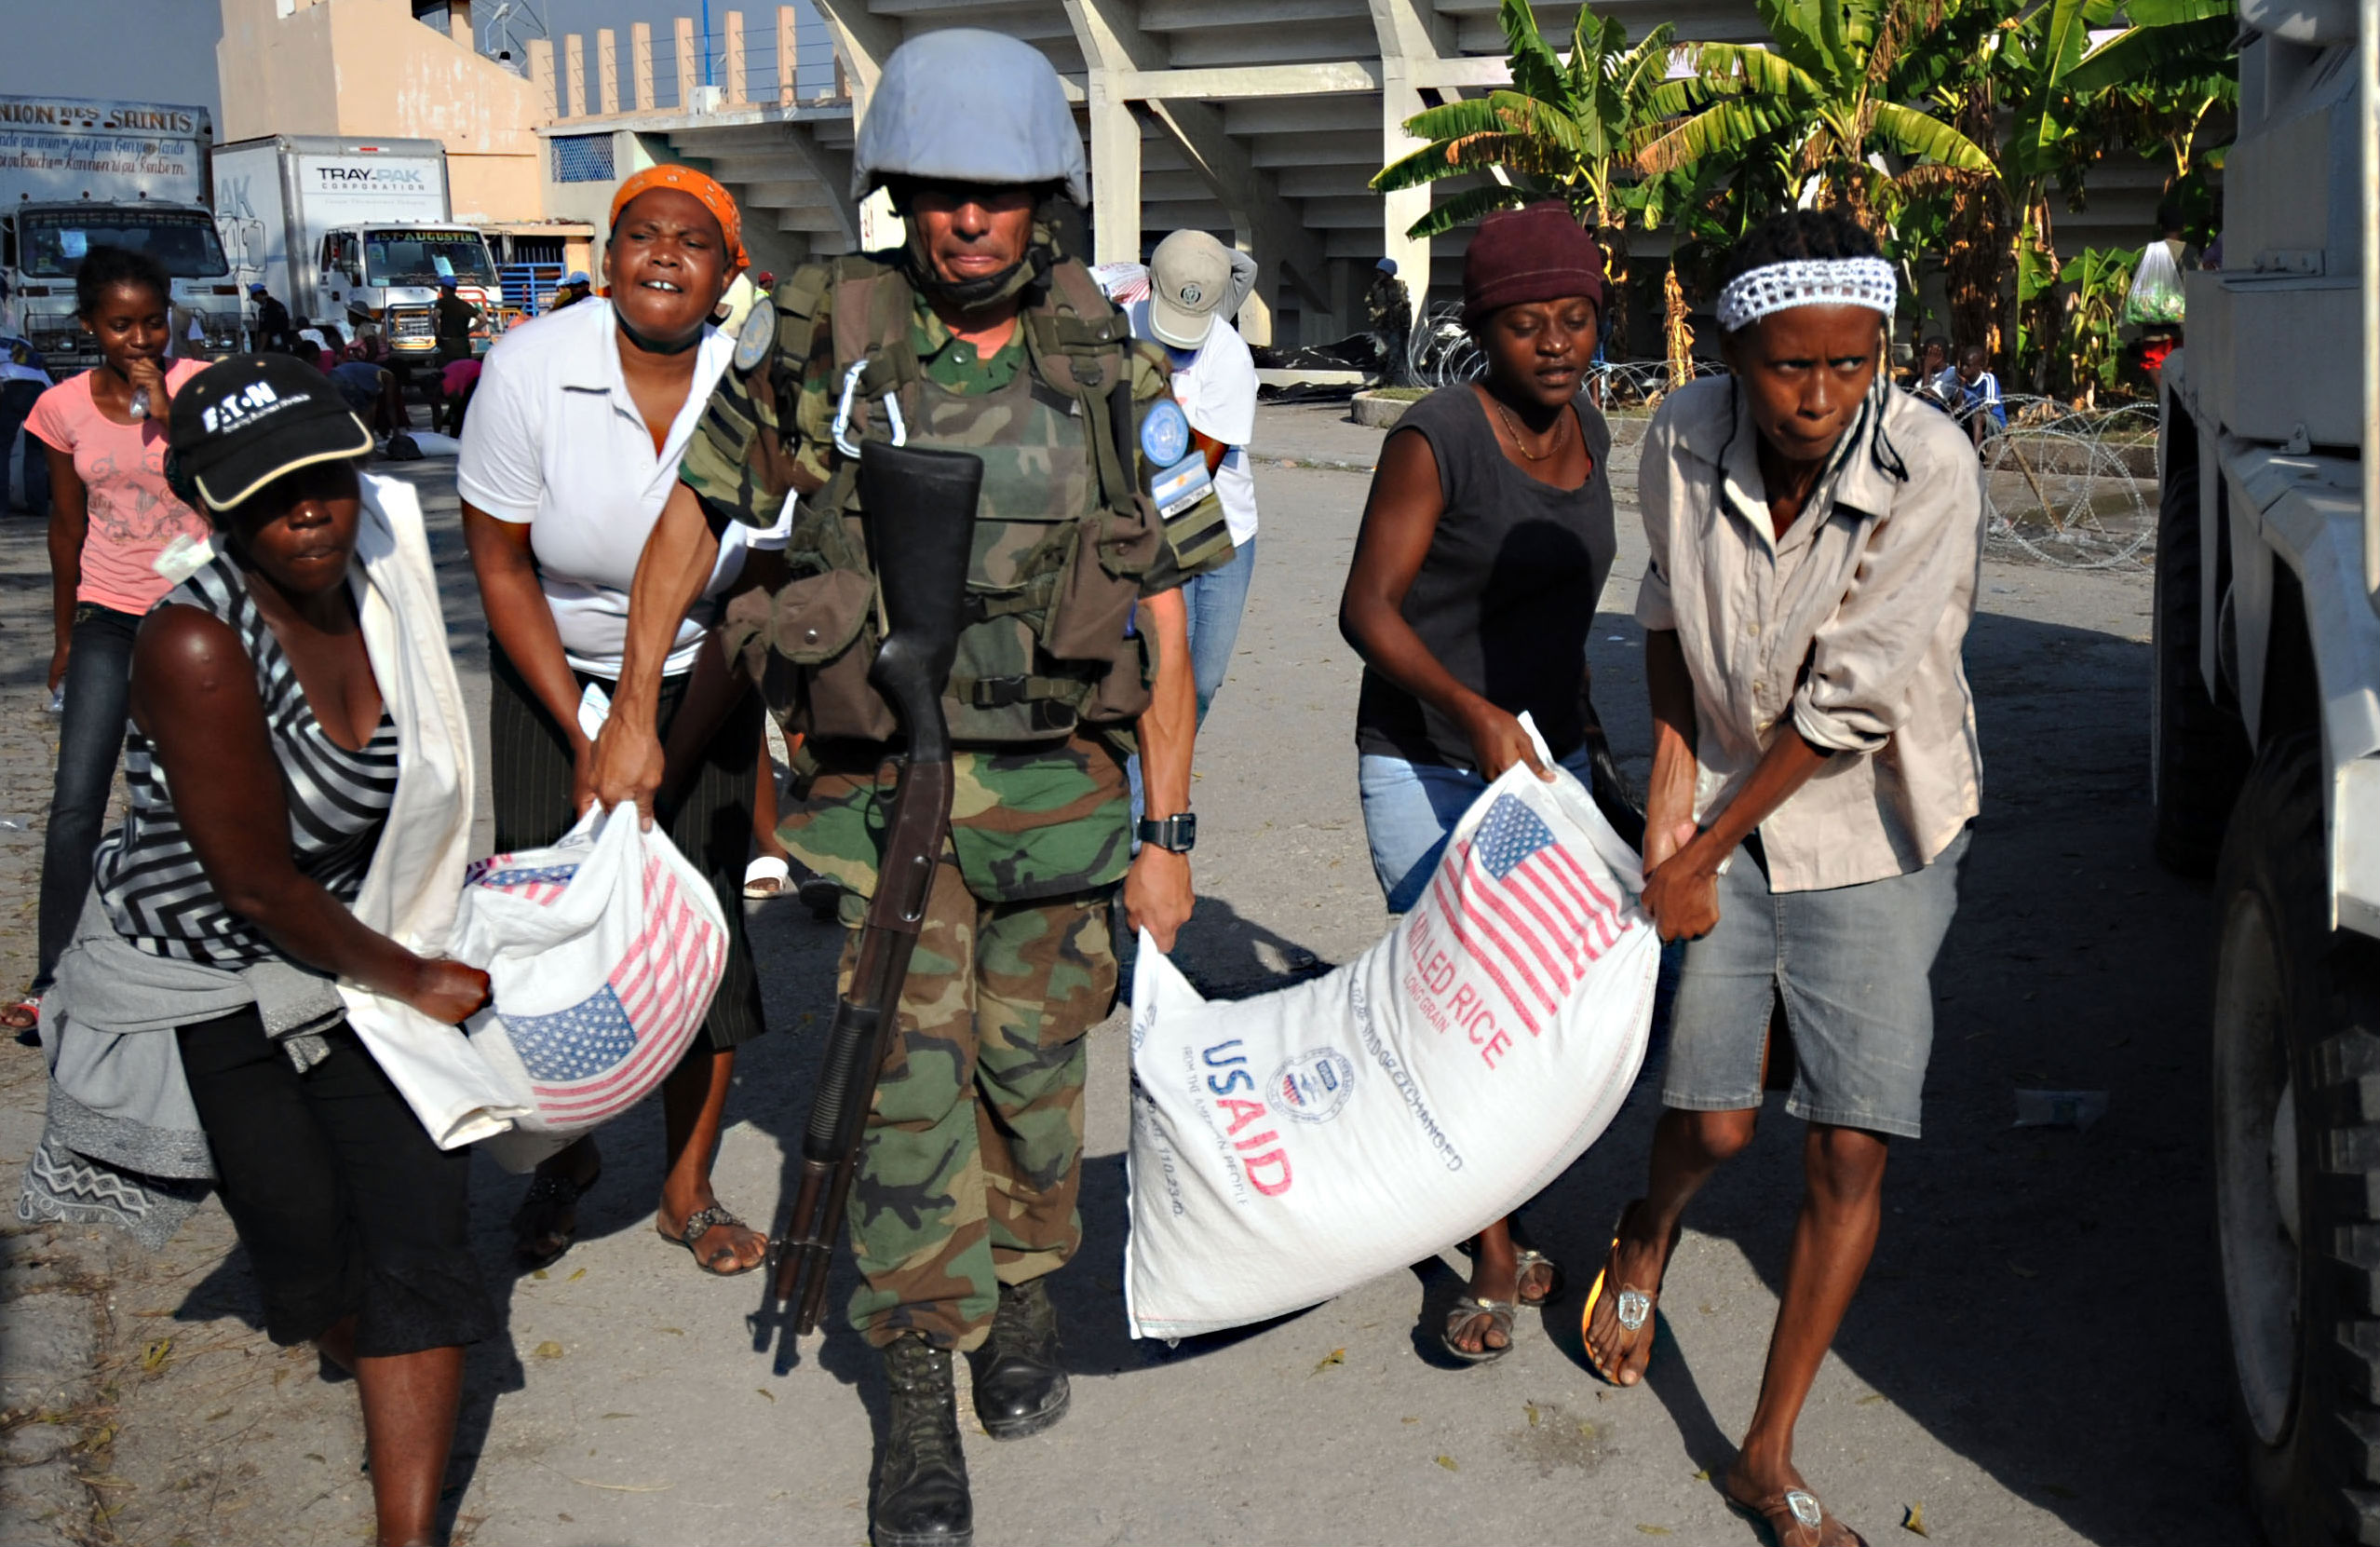 haiti earthquake relief